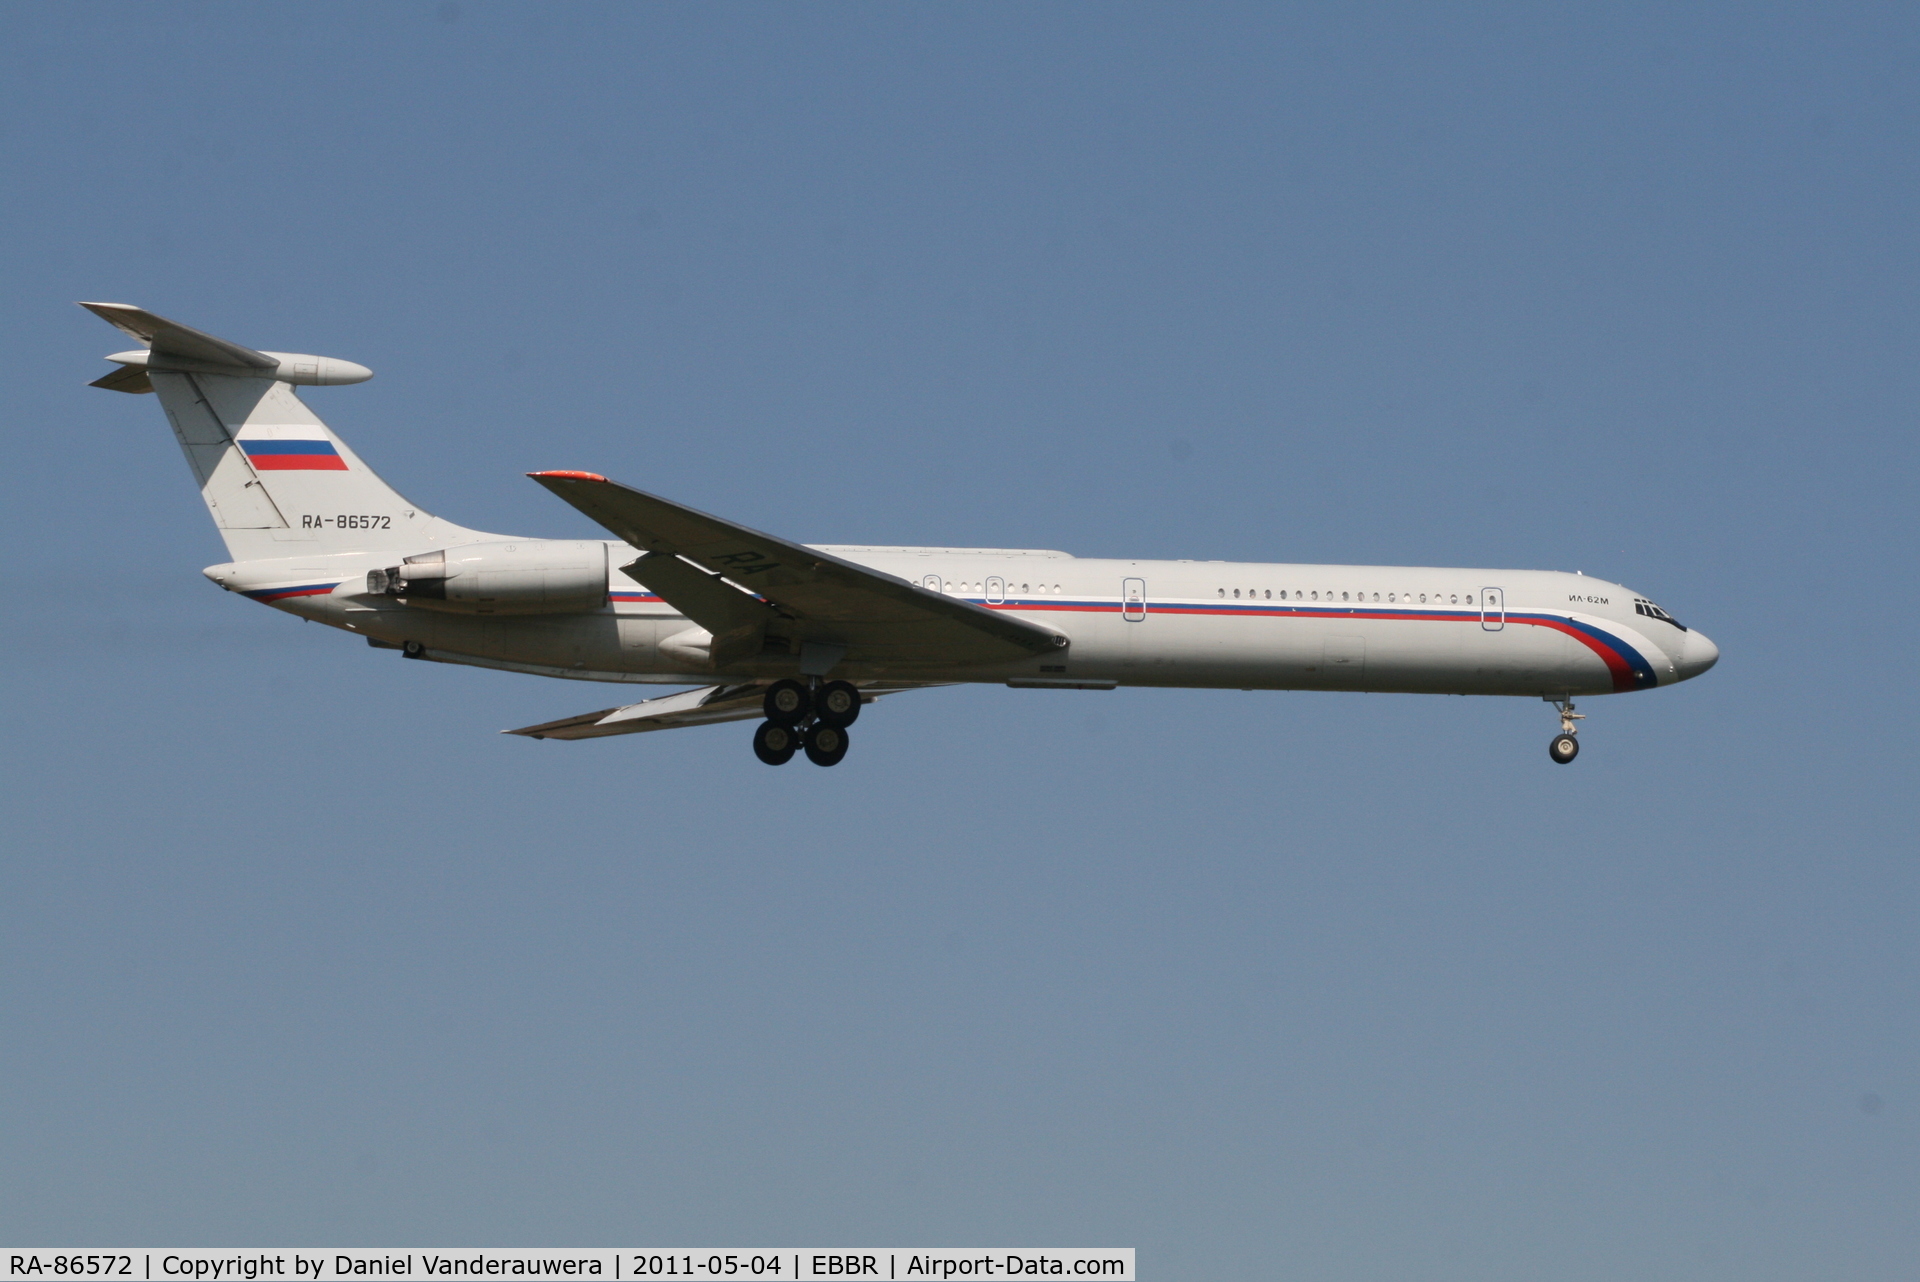 RA-86572, 1993 Ilyushin Il-62M C/N 3154624, Descending to RWY 02